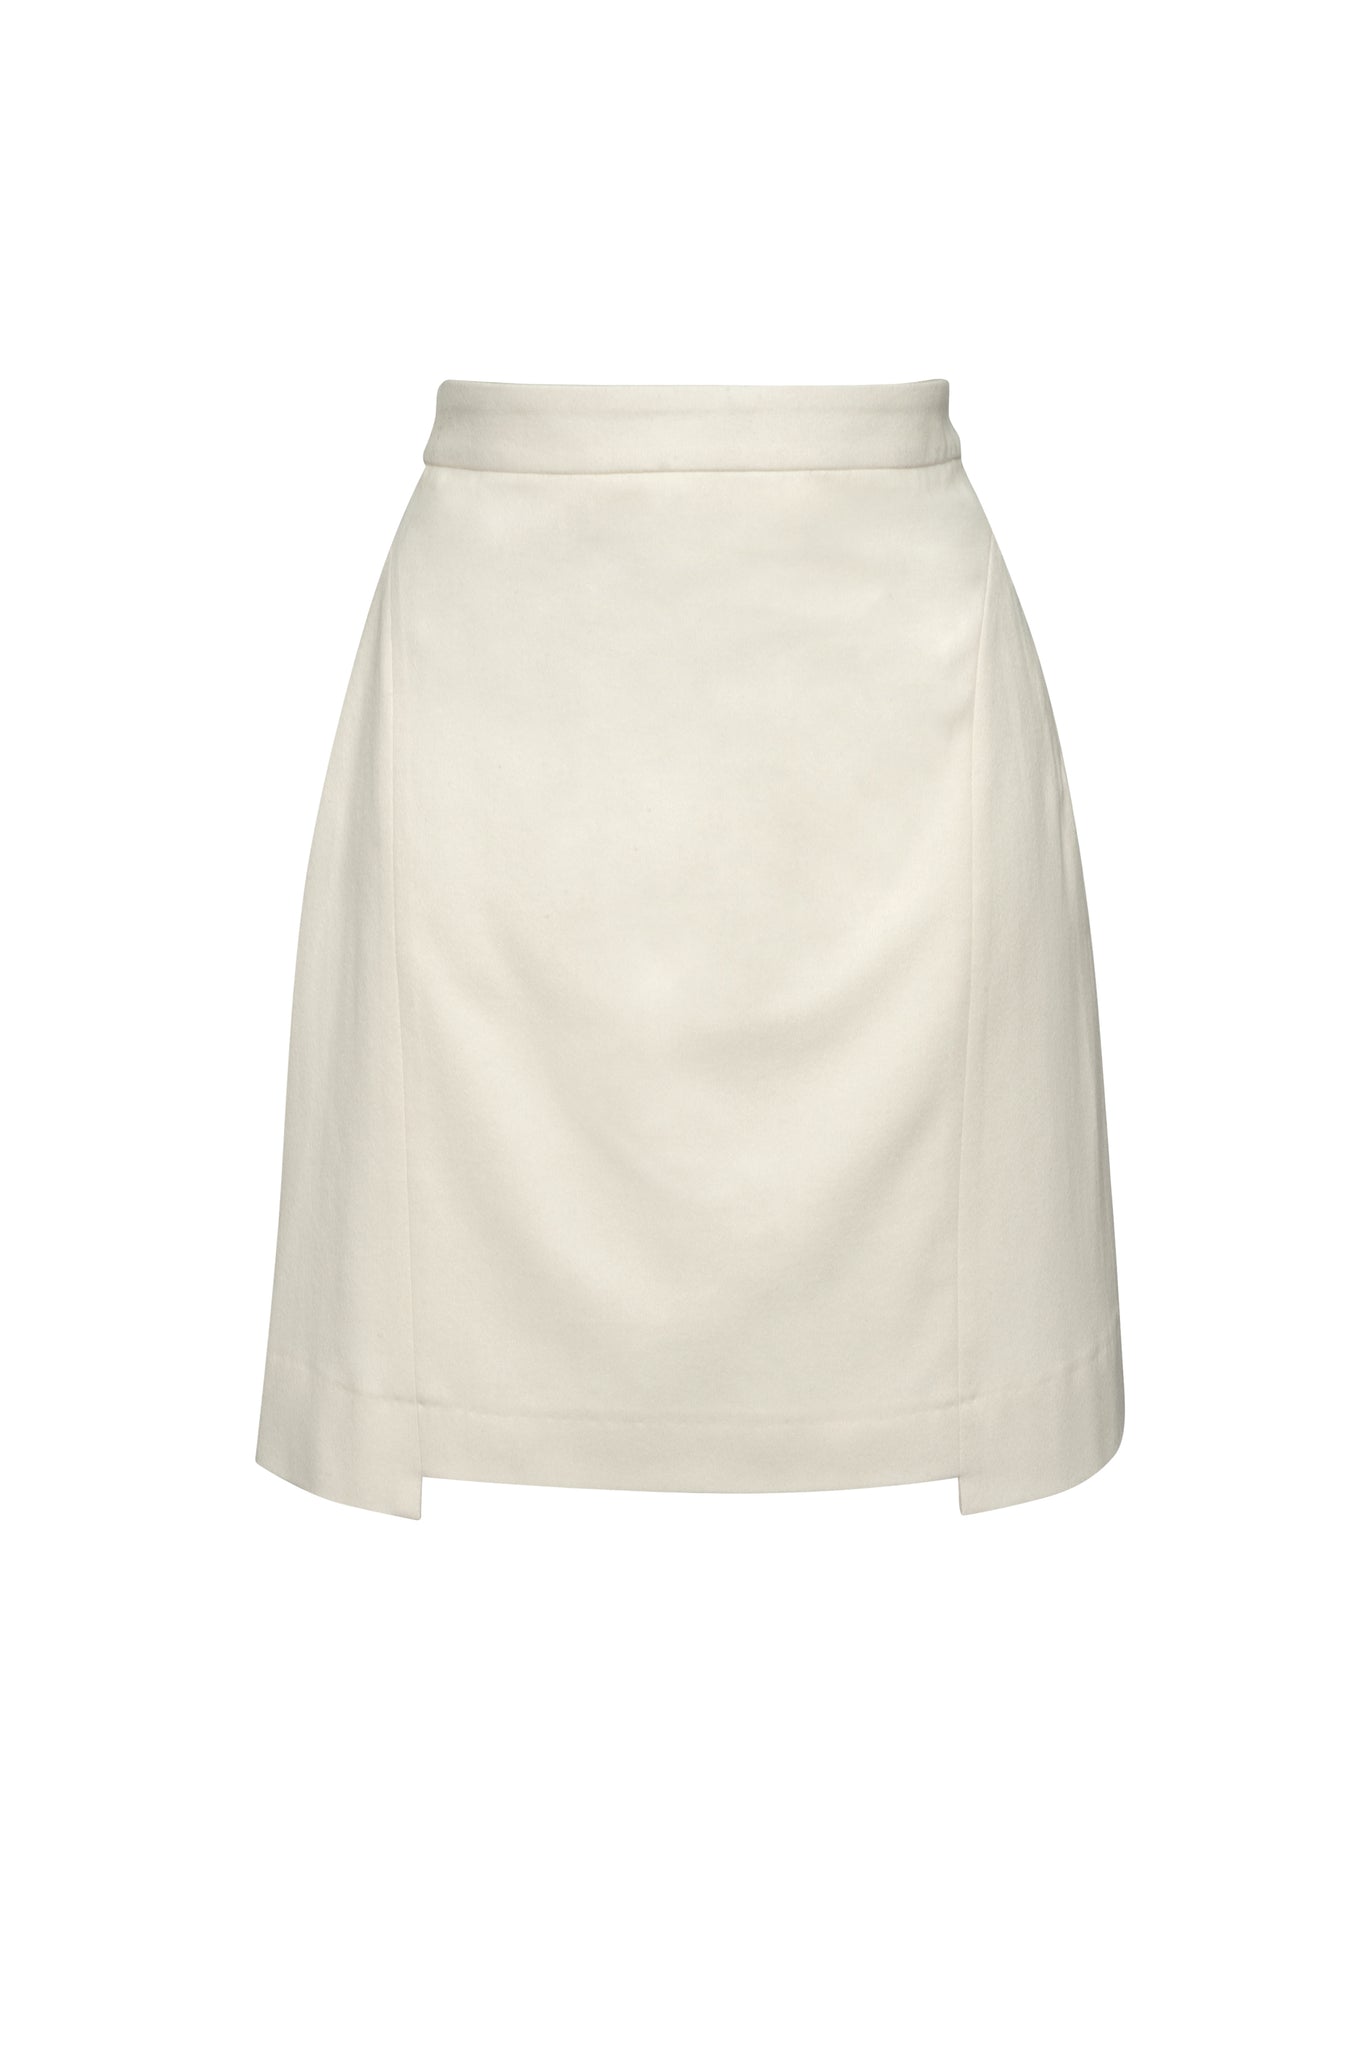 01/3 Mini Skirt Wool Ivory front - hello'ben store